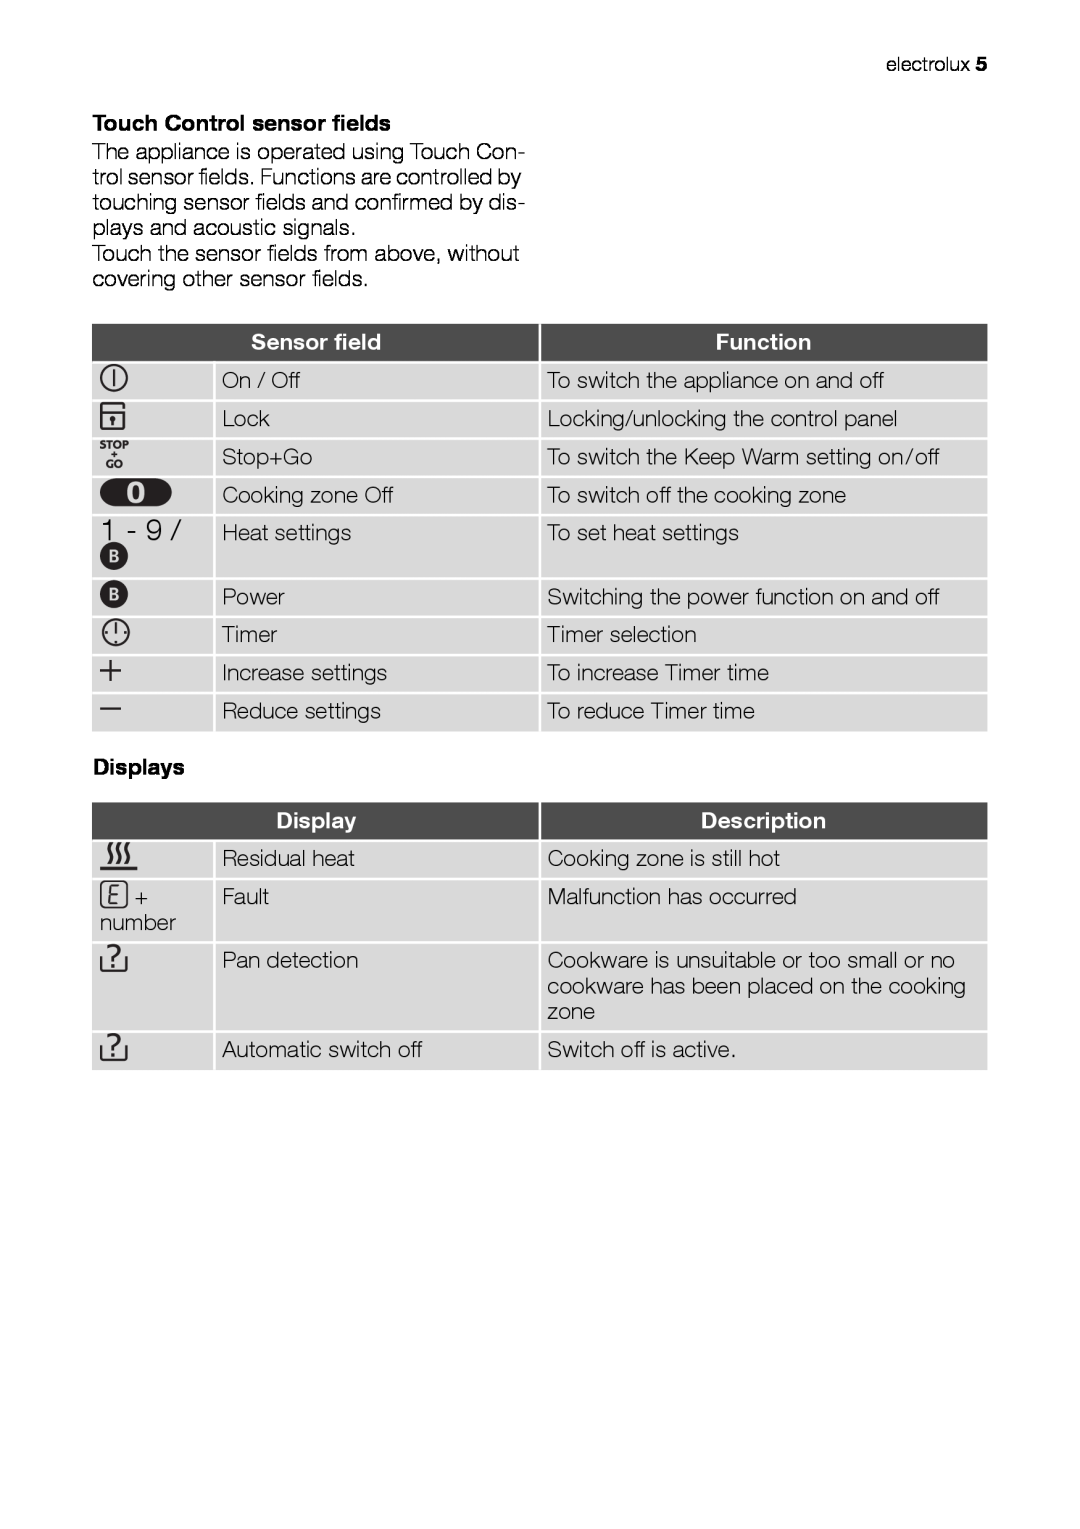 Electrolux EHD 60150 IAU user manual Touch Control sensor fields, Displays, Sensor field, Function, Description 